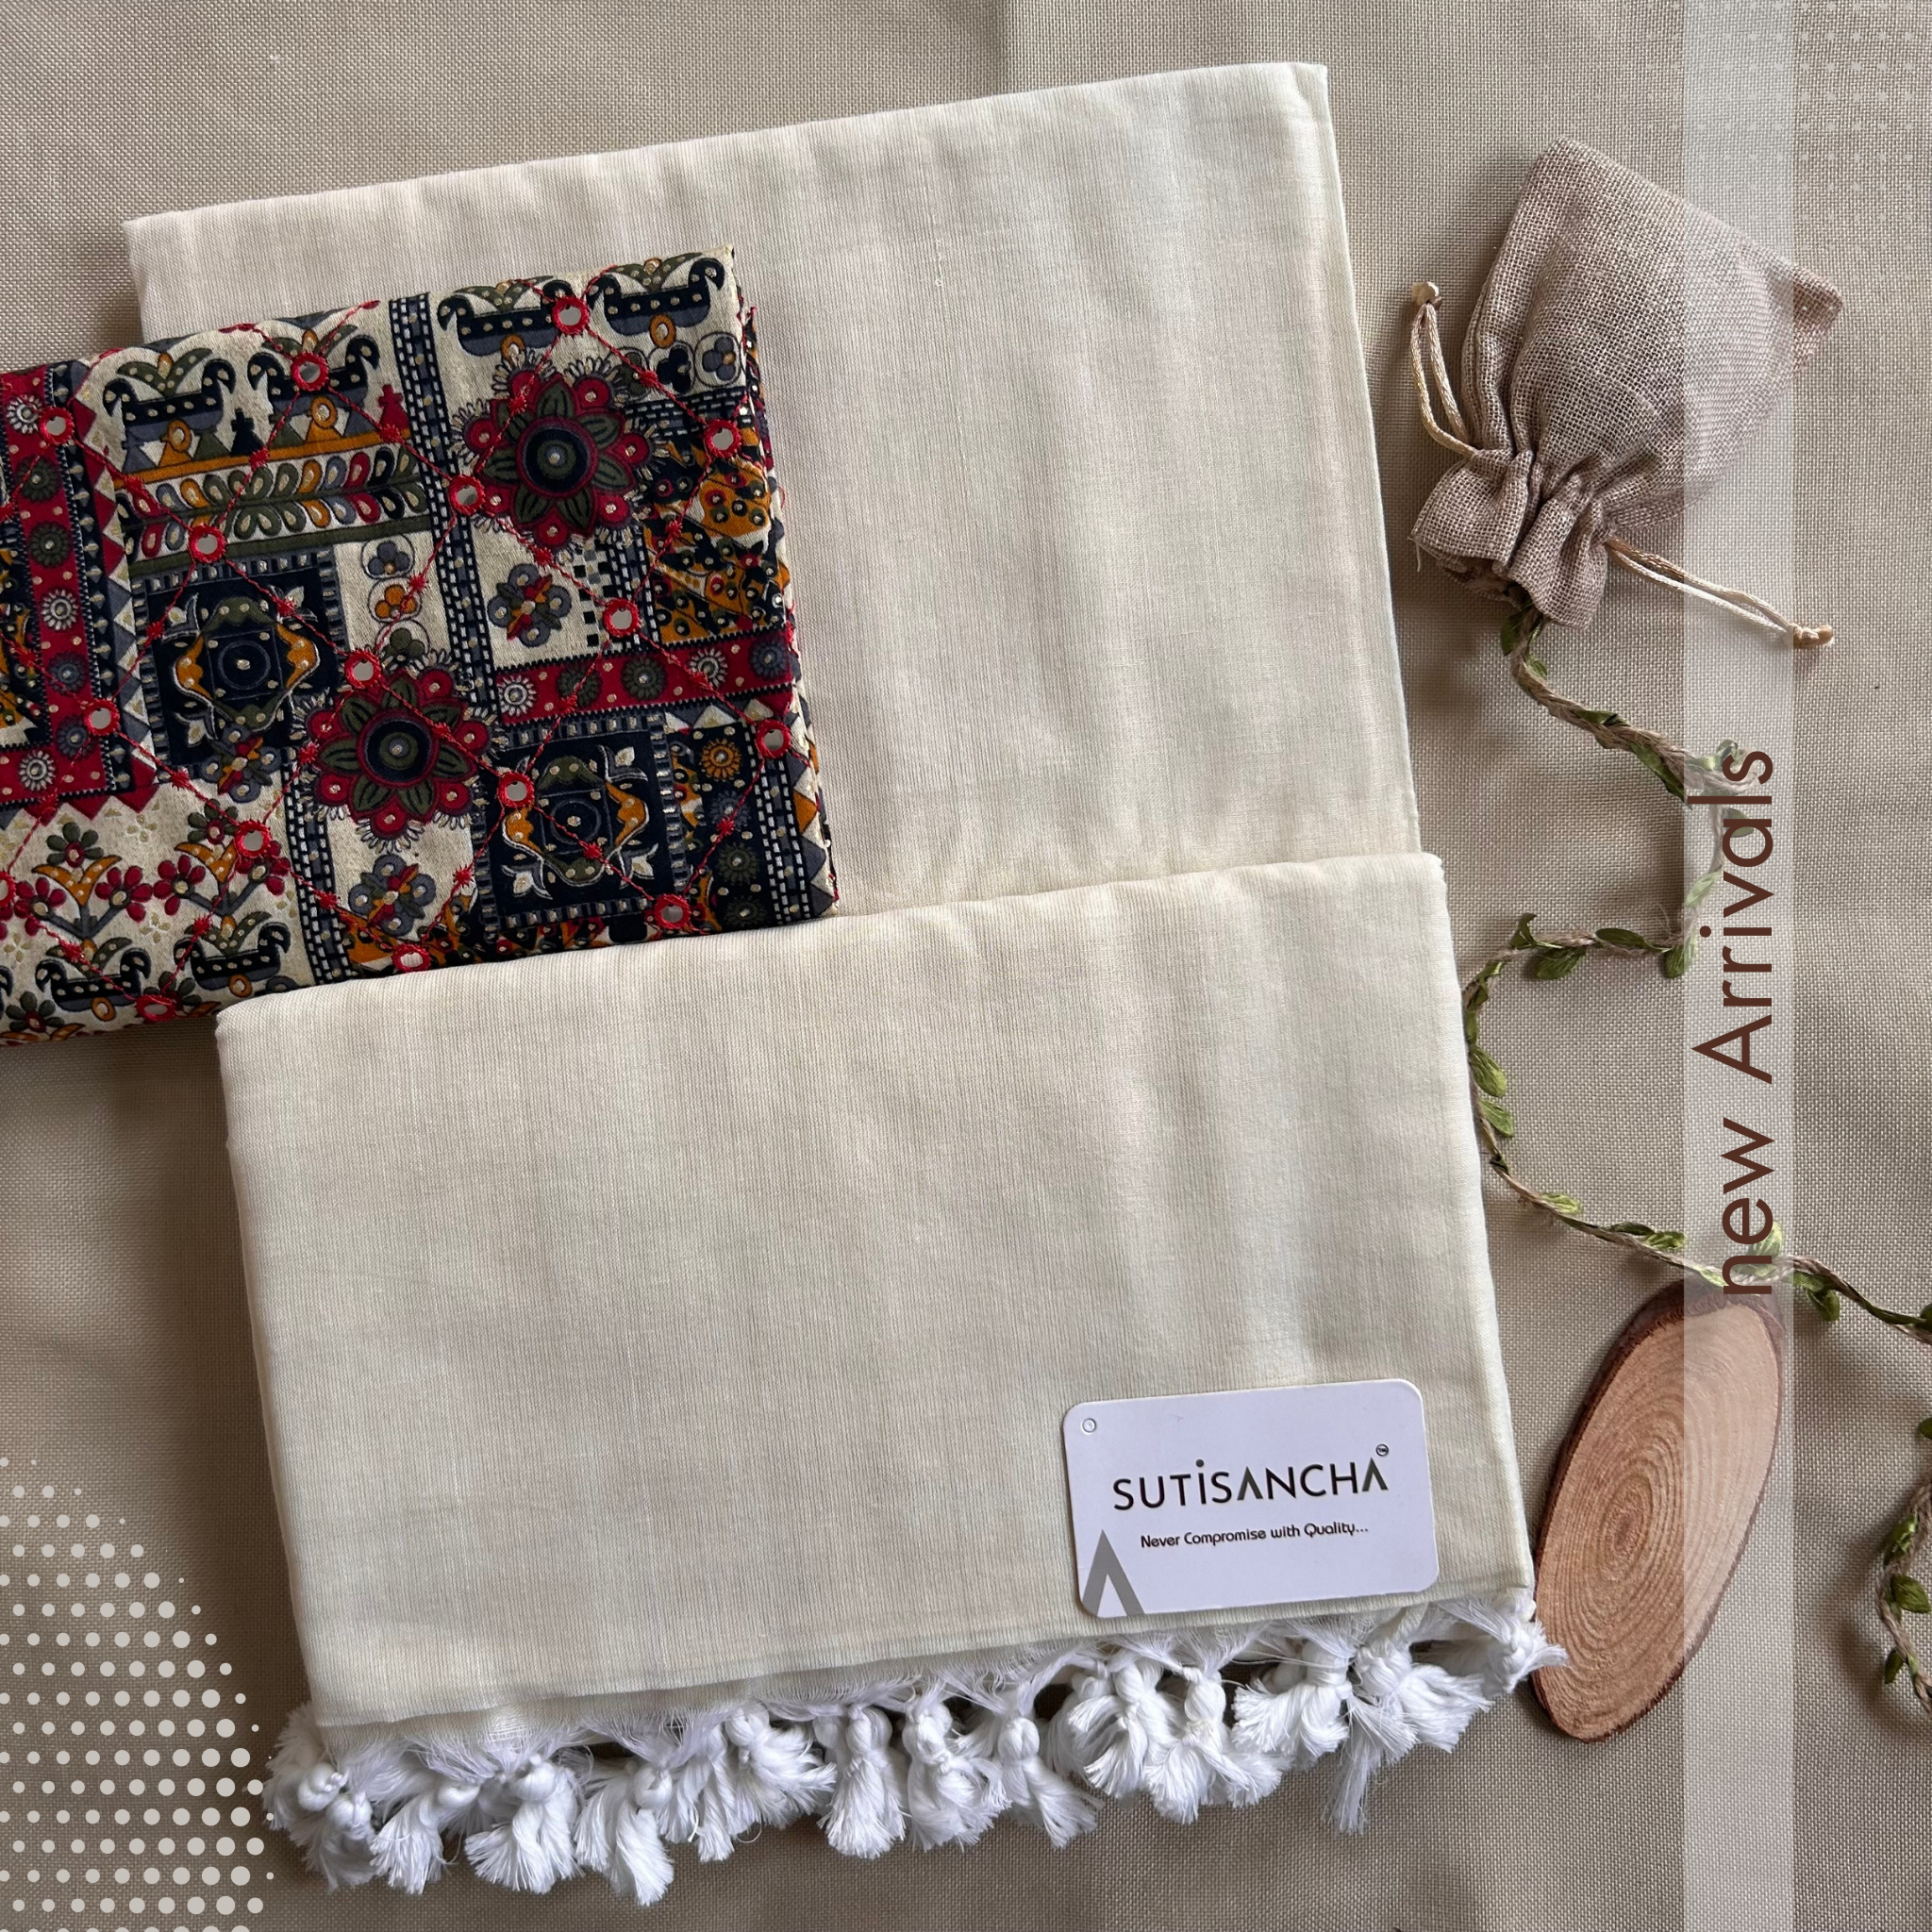 Sutisancha Offwhite Handloom Cotton Saree with designer Blouse